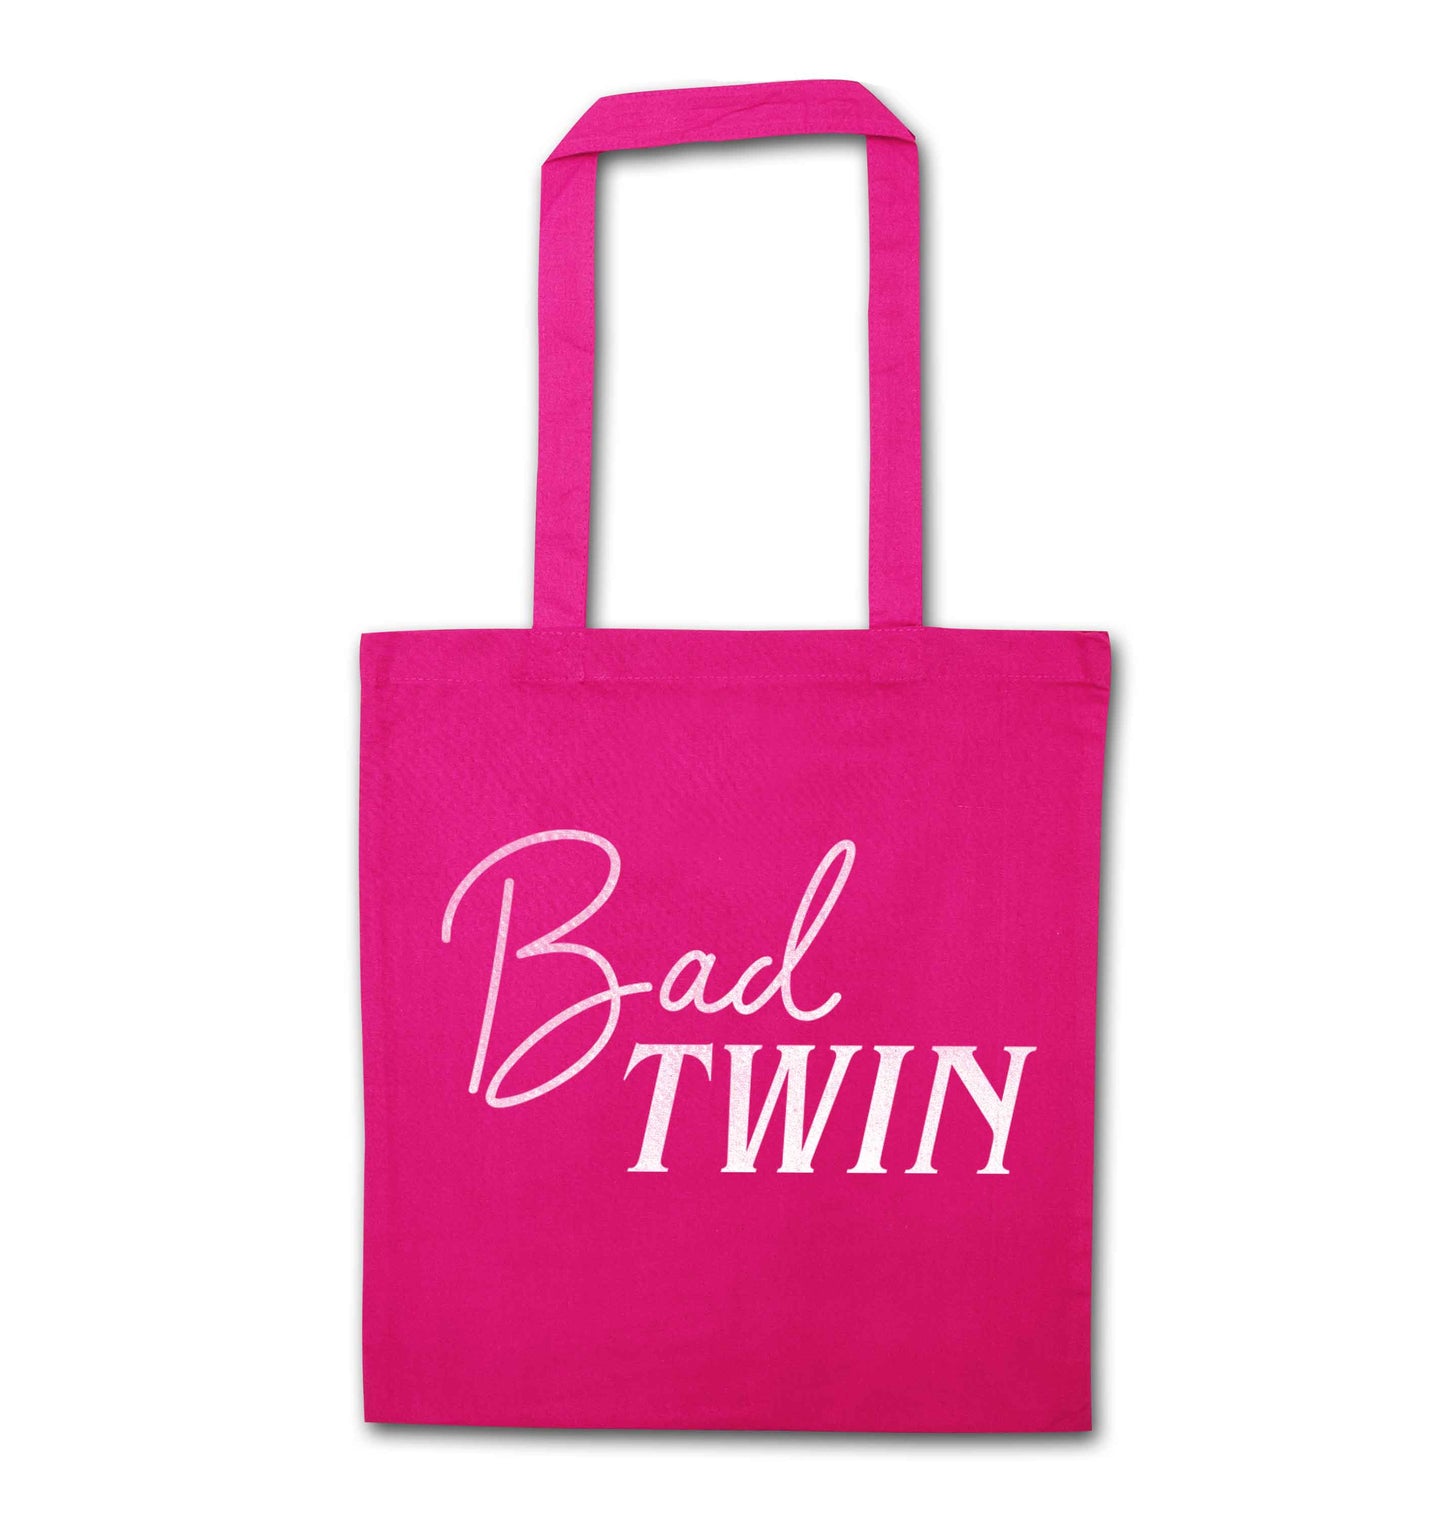 Bad twin pink tote bag